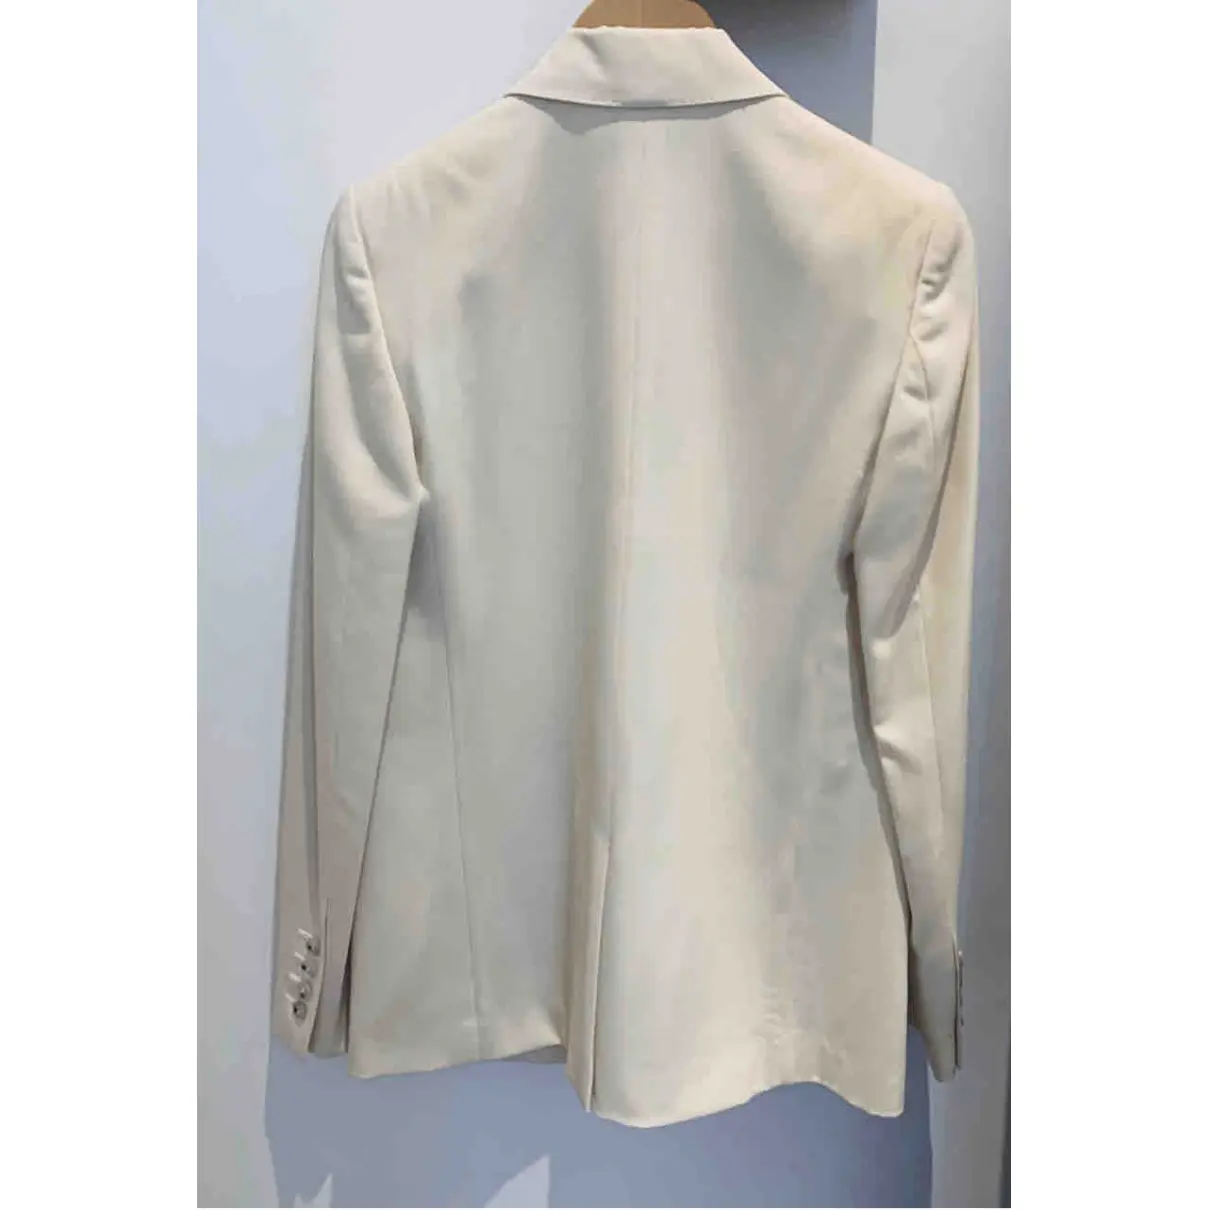 Buy Stella McCartney Wool suit jacket online